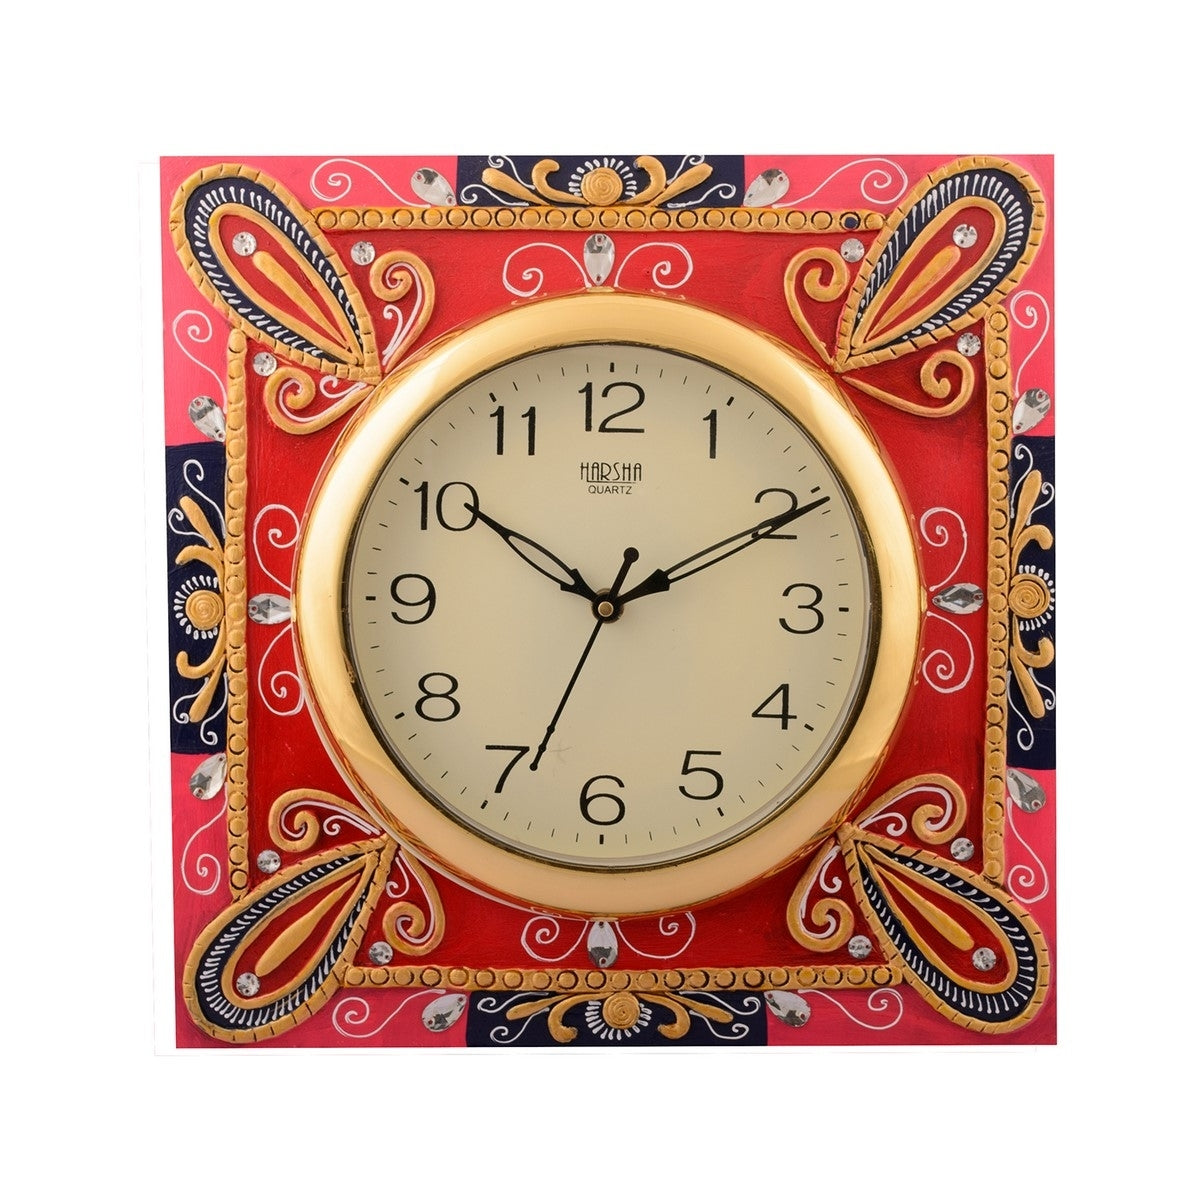 Artistic Handicrafted Square Shape Wooden Papier Mache Designer Wall Clock